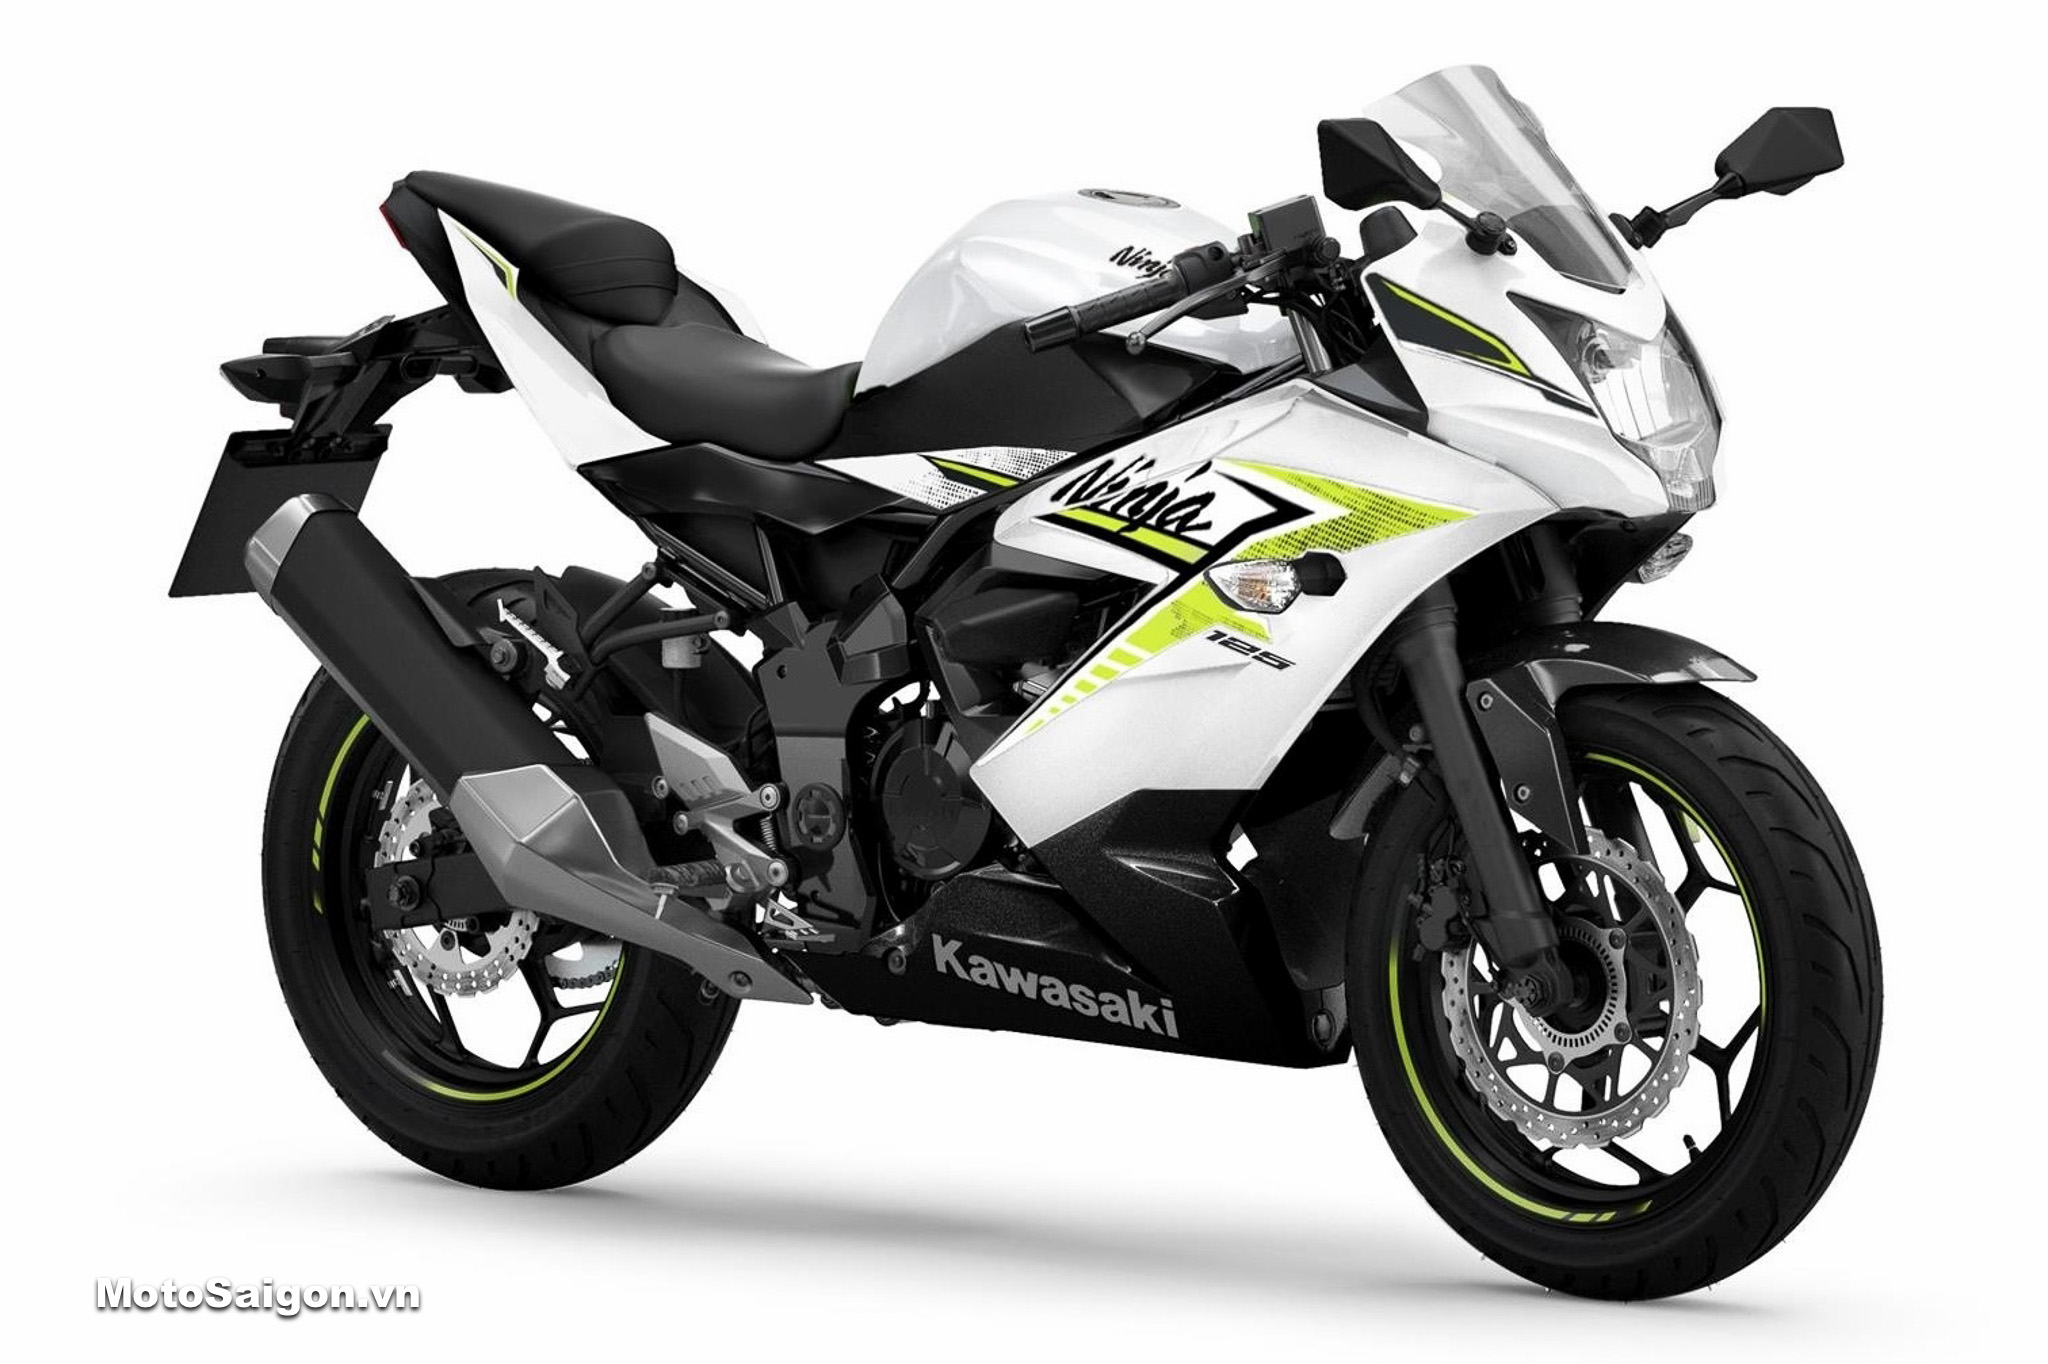 Kawasaki Ninja 150 mới dự kiến ra mắt trong năm 2020  2banhvn